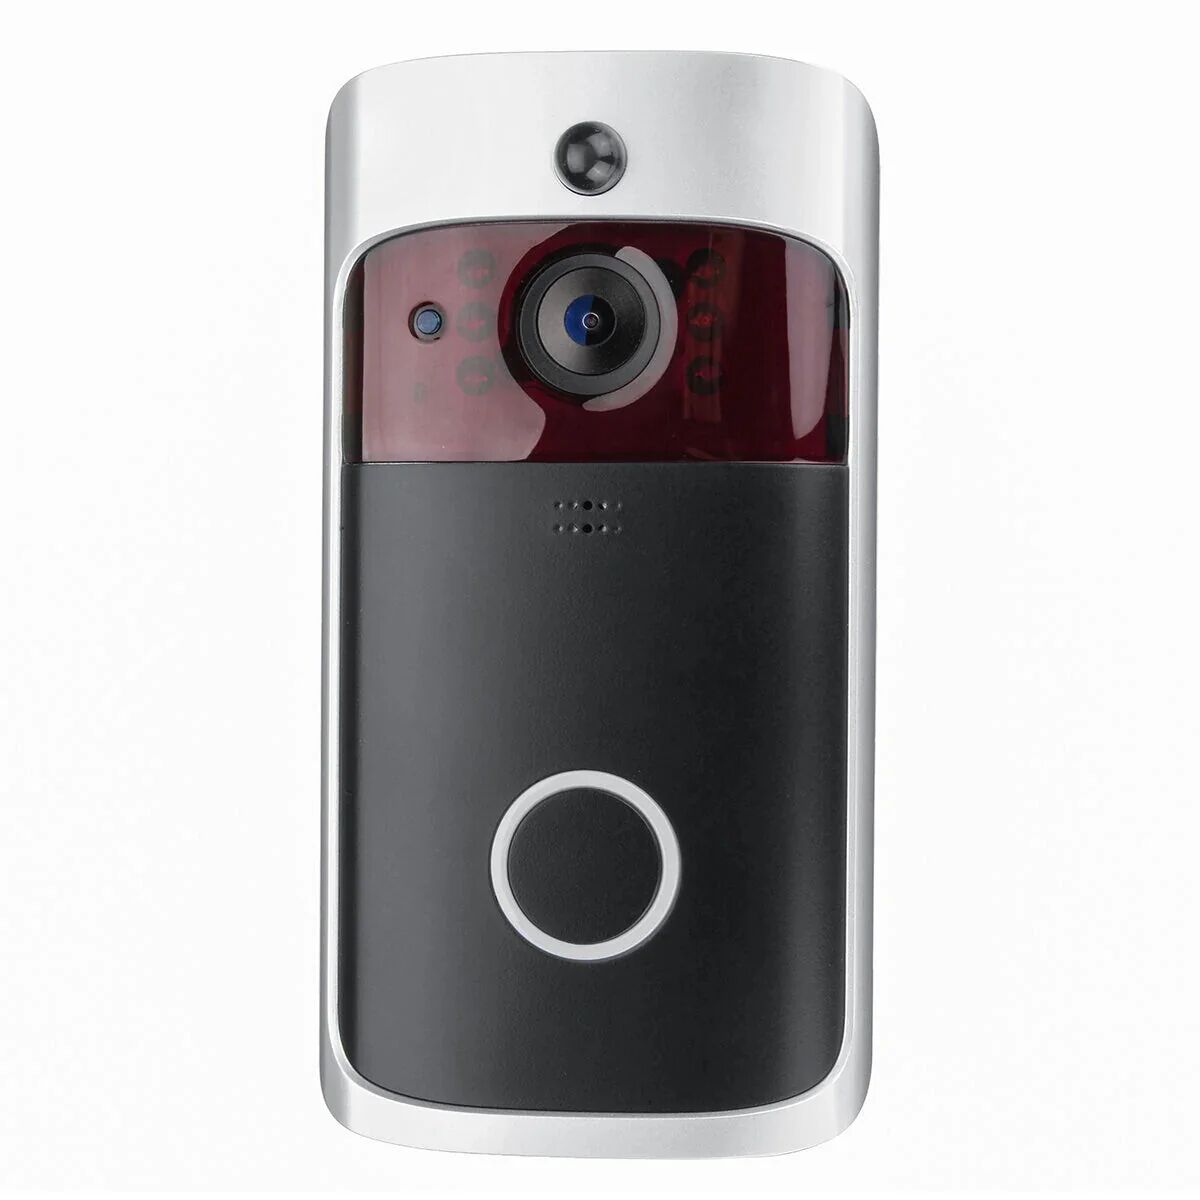 DailySale Wireless Camera Video Doorbell